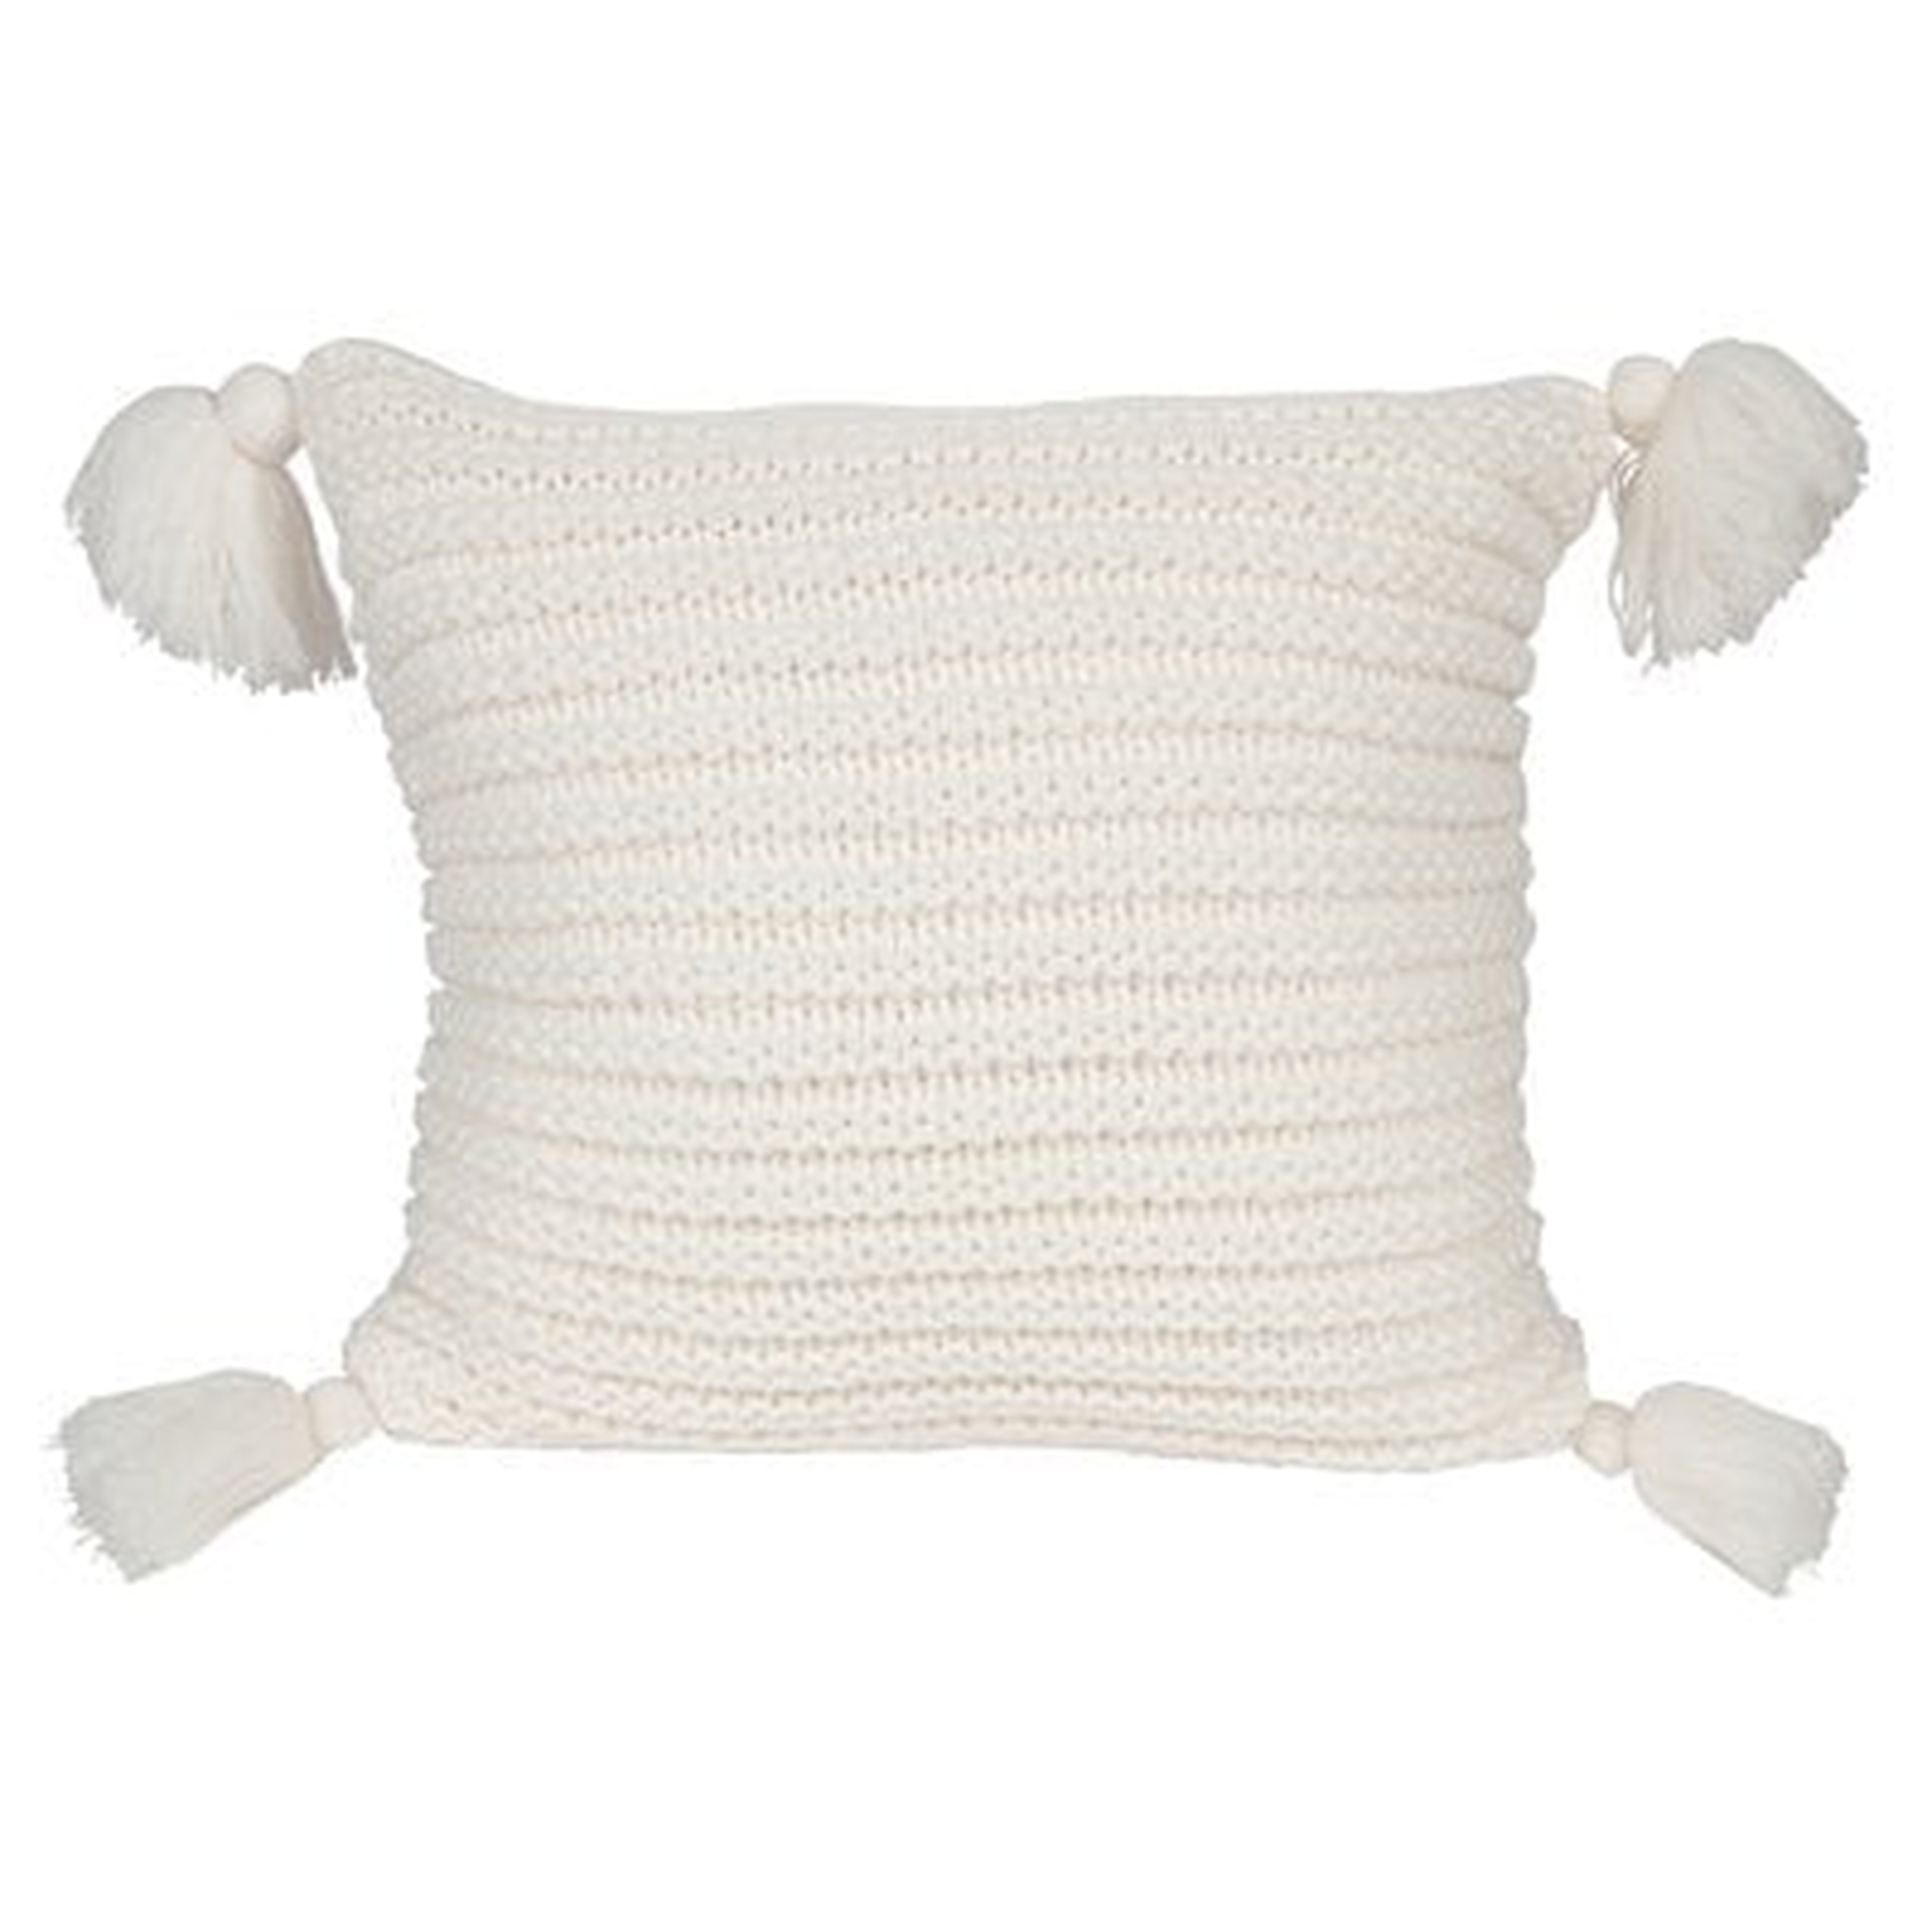 Dorcheer Ribbed Knit Throw Pillow Cover - Wayfair